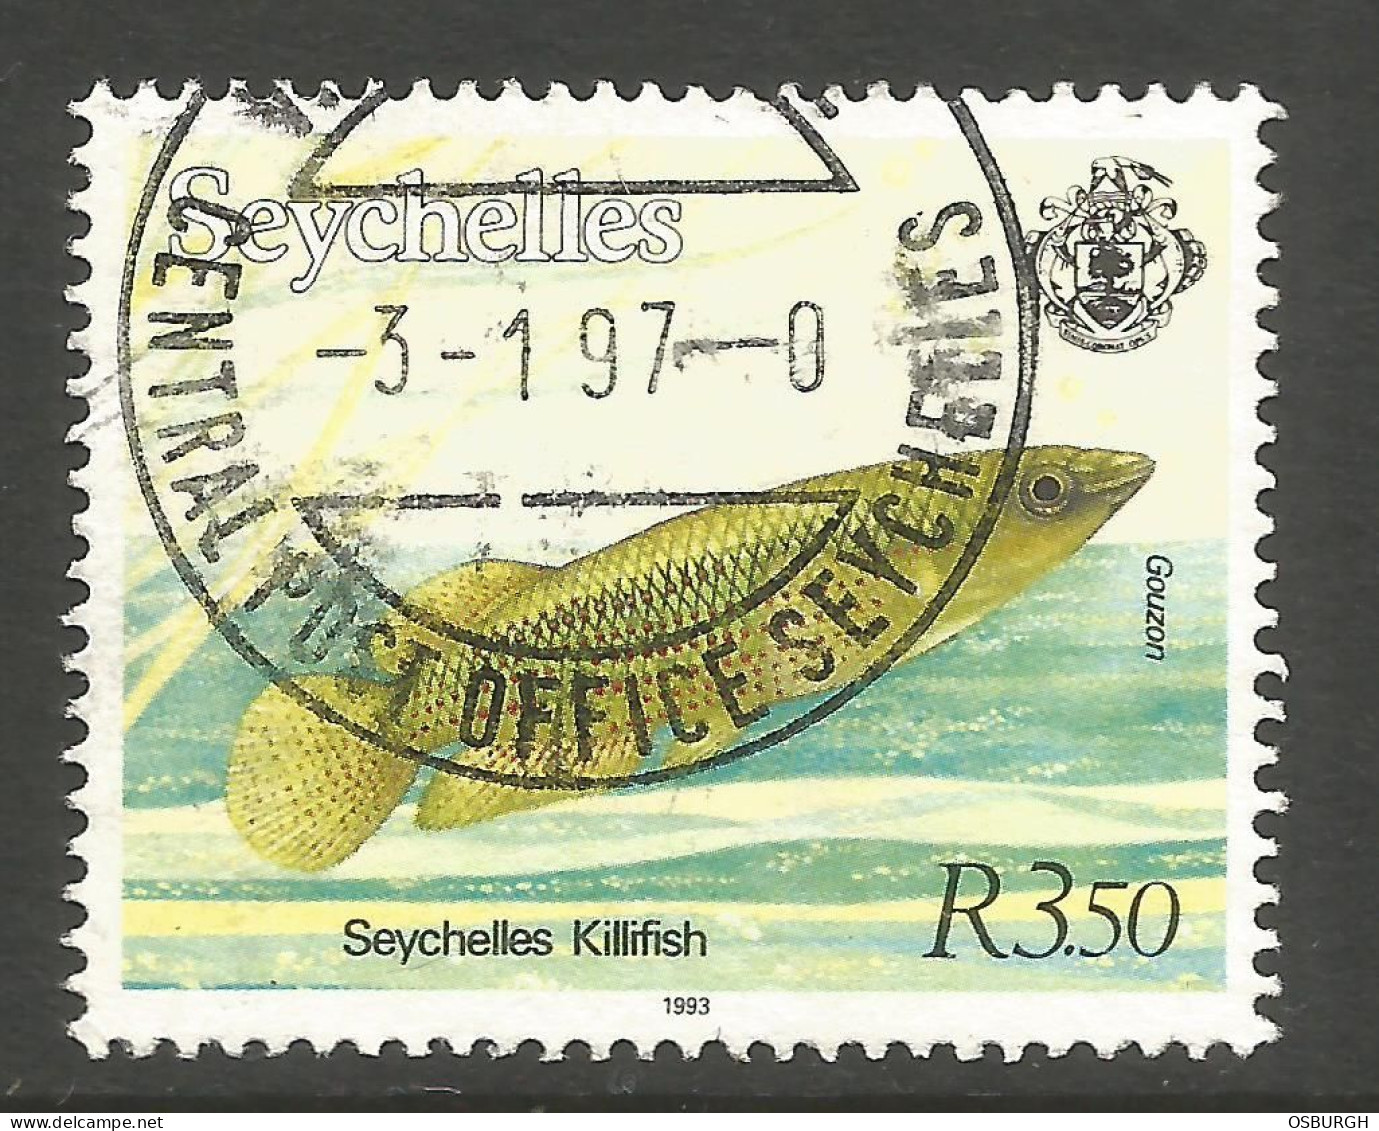 SEYCHELLES. R3.50 KILLIFISH USED - Seychelles (1976-...)